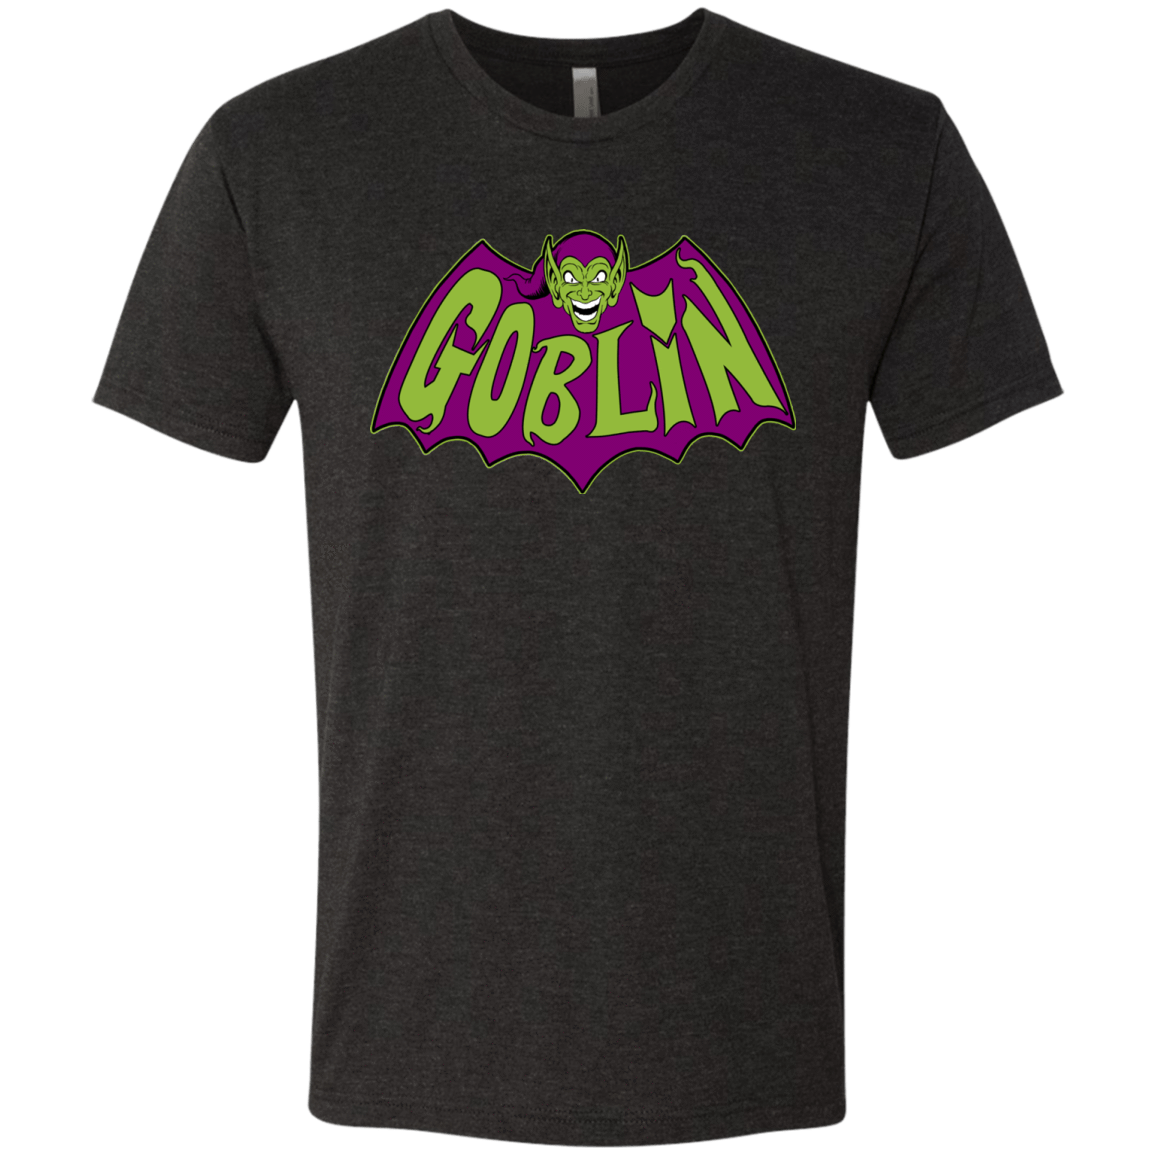 T-Shirts Vintage Black / Small Goblin Men's Triblend T-Shirt